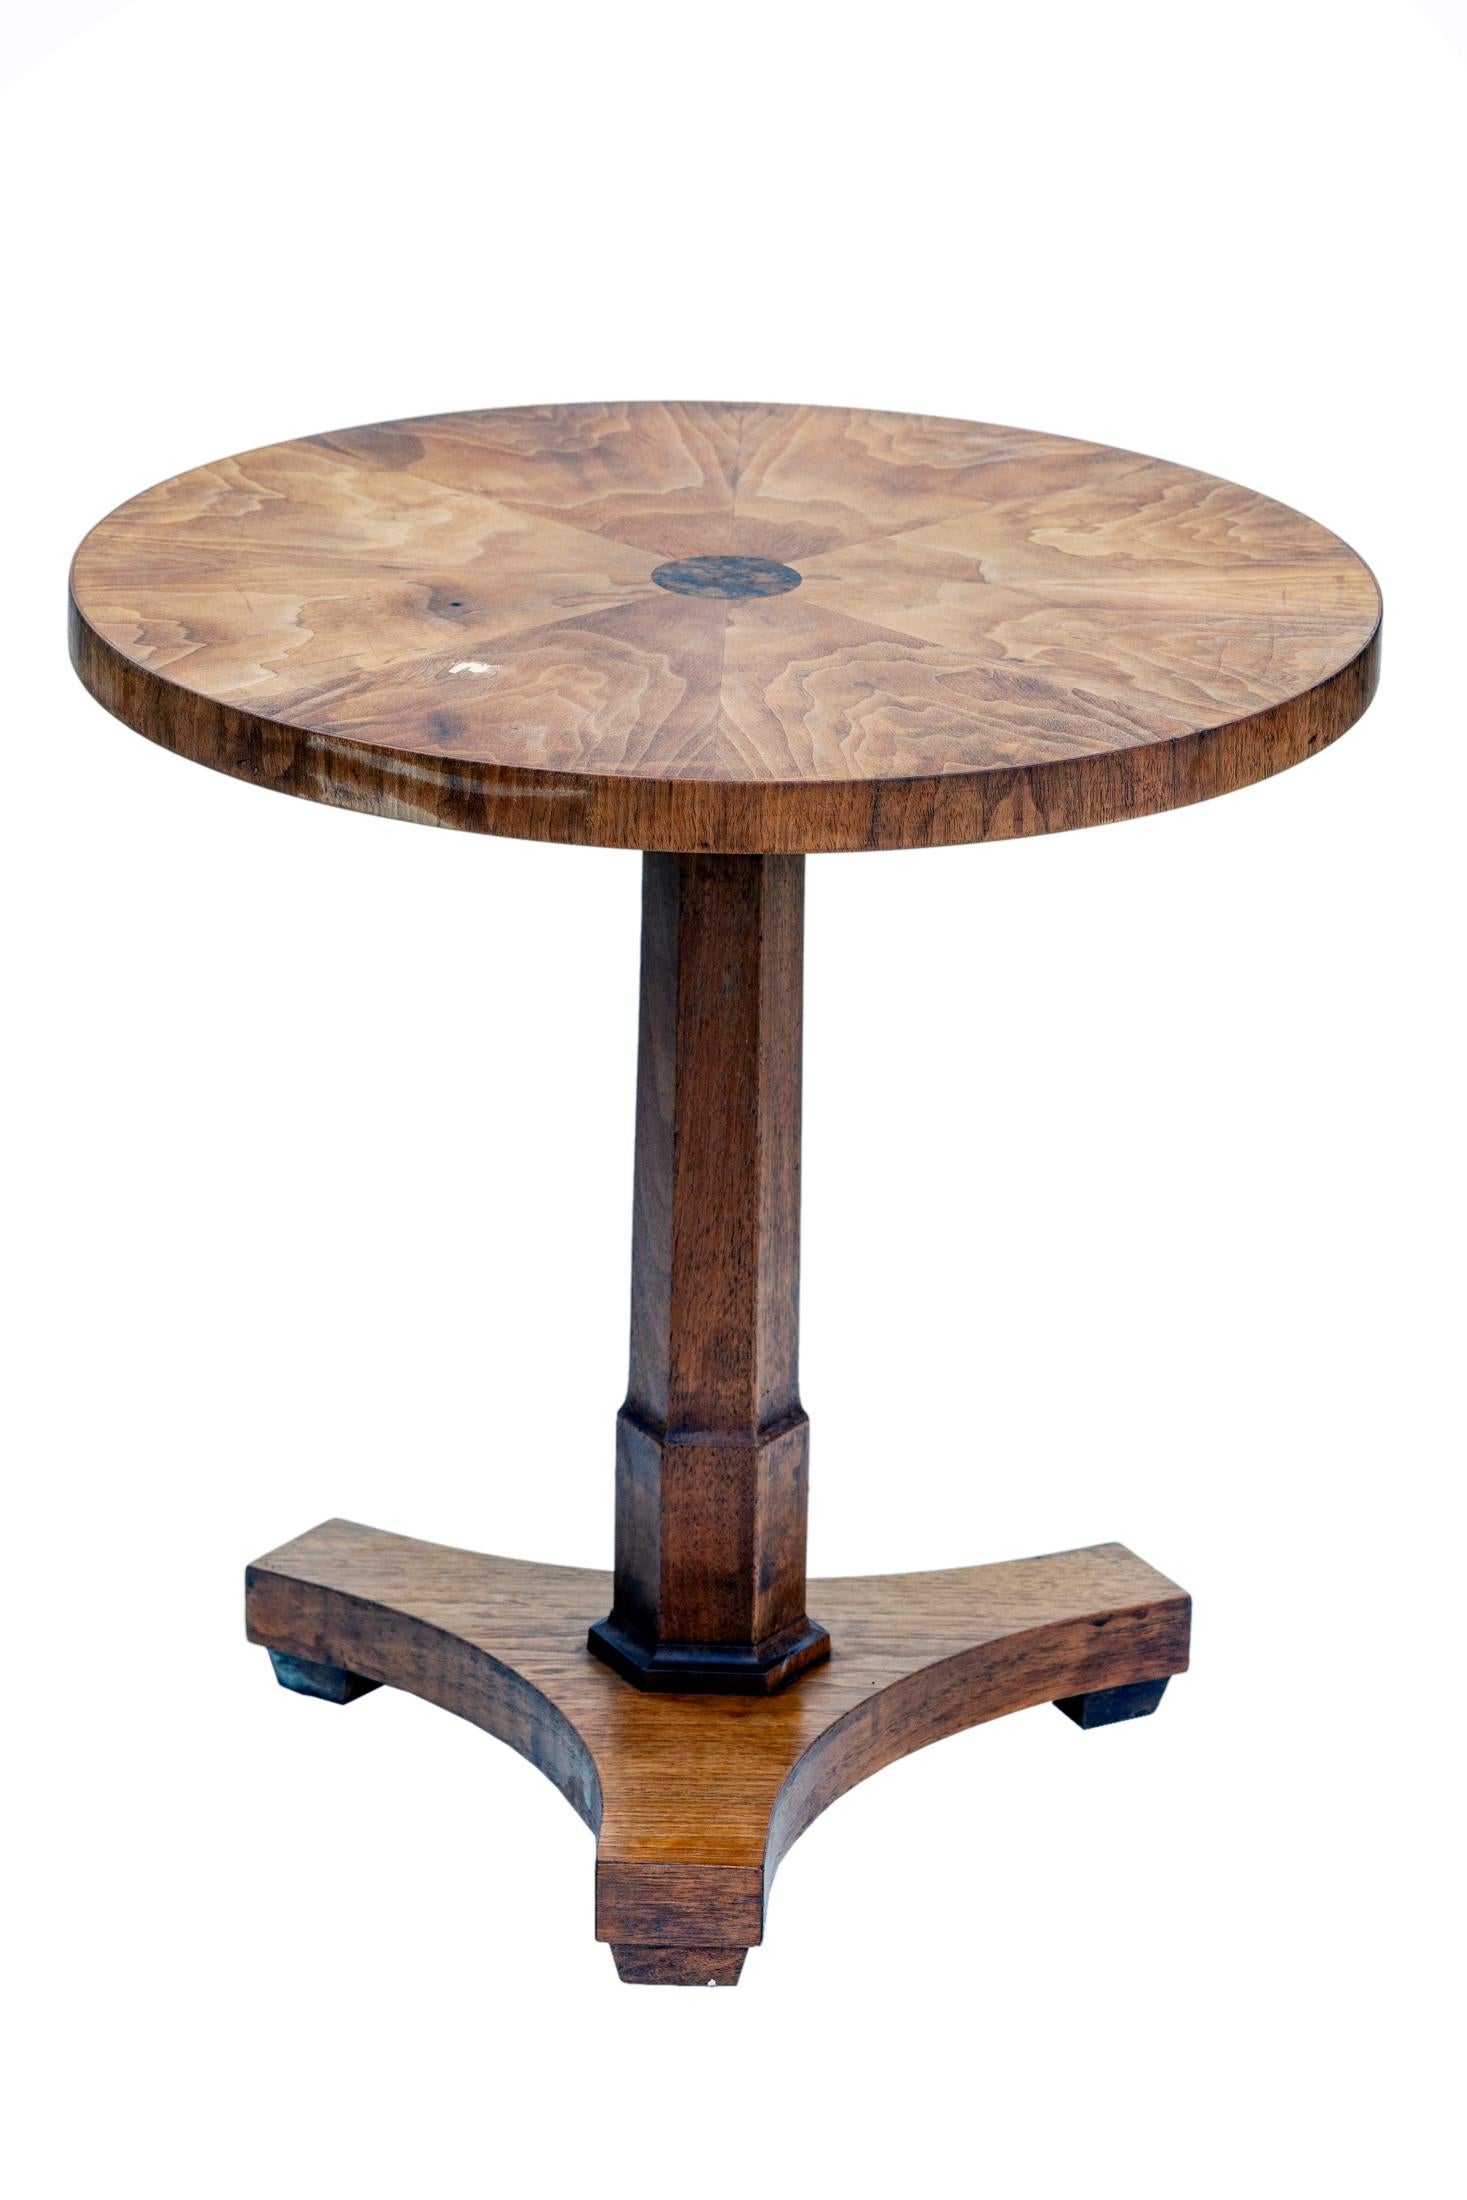 Elegant diminutive occasional /pedestal table, walnut veneers, simple center medallion. Six-sided stem sits on a base with three feet.